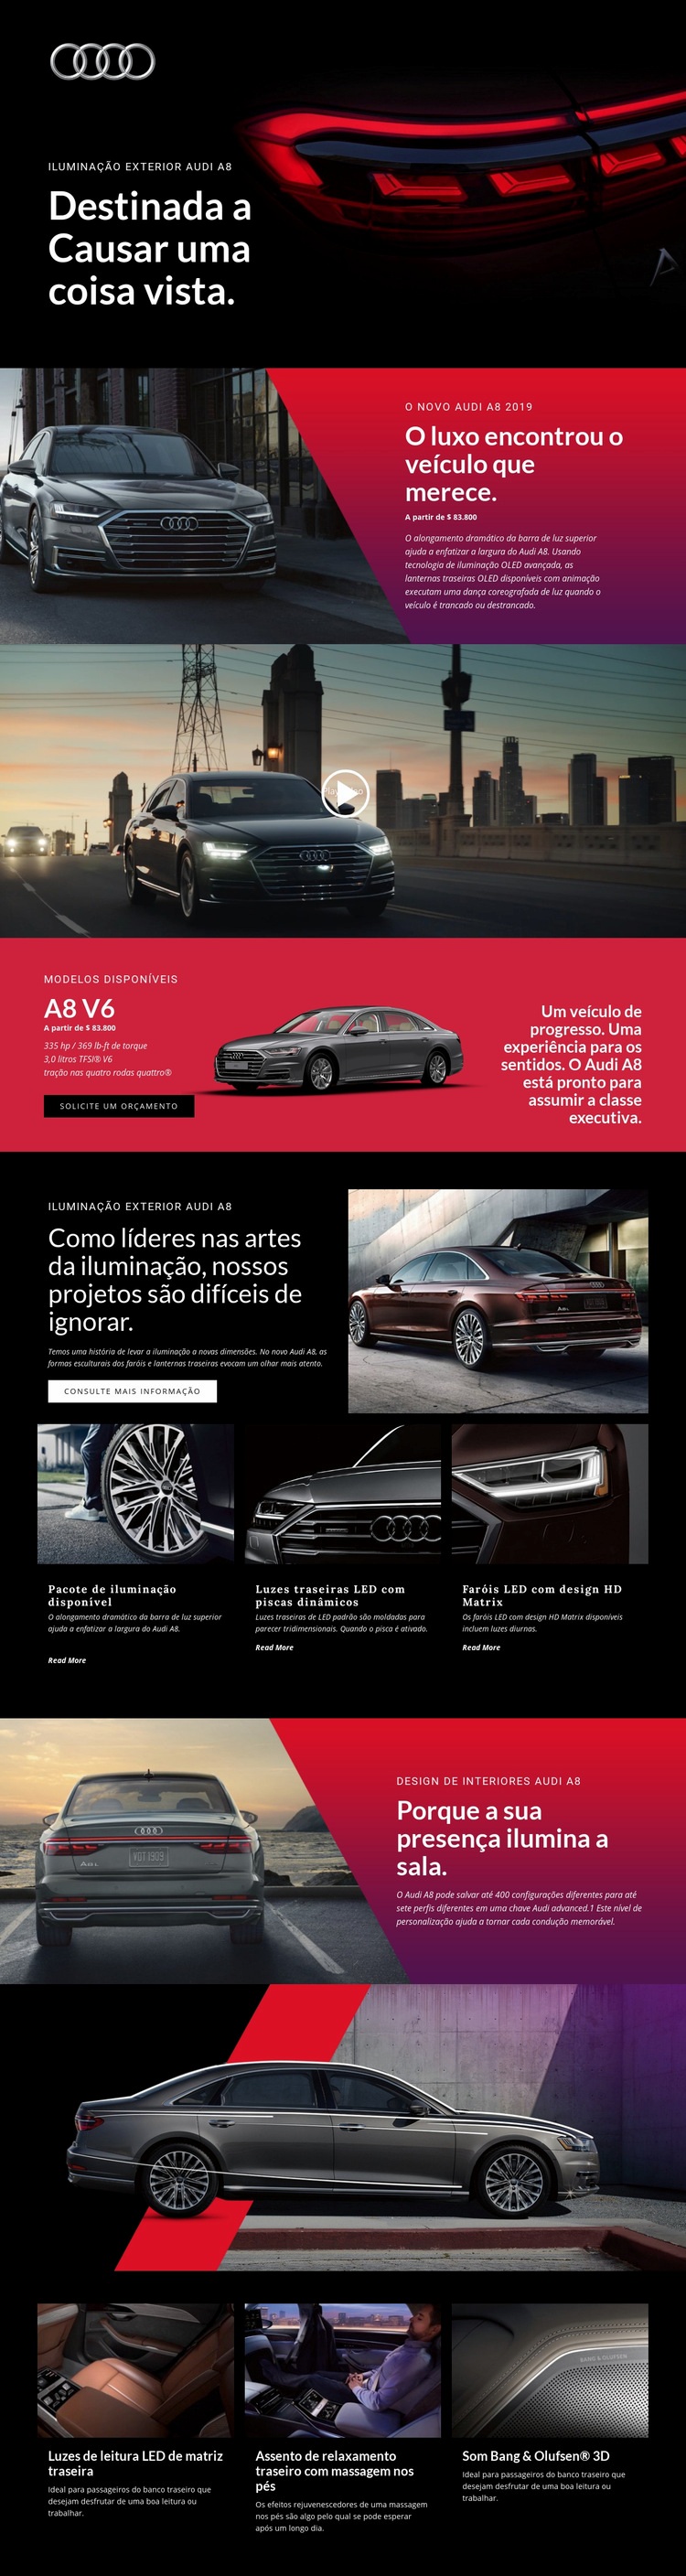 Carros de luxo Audi Design do site